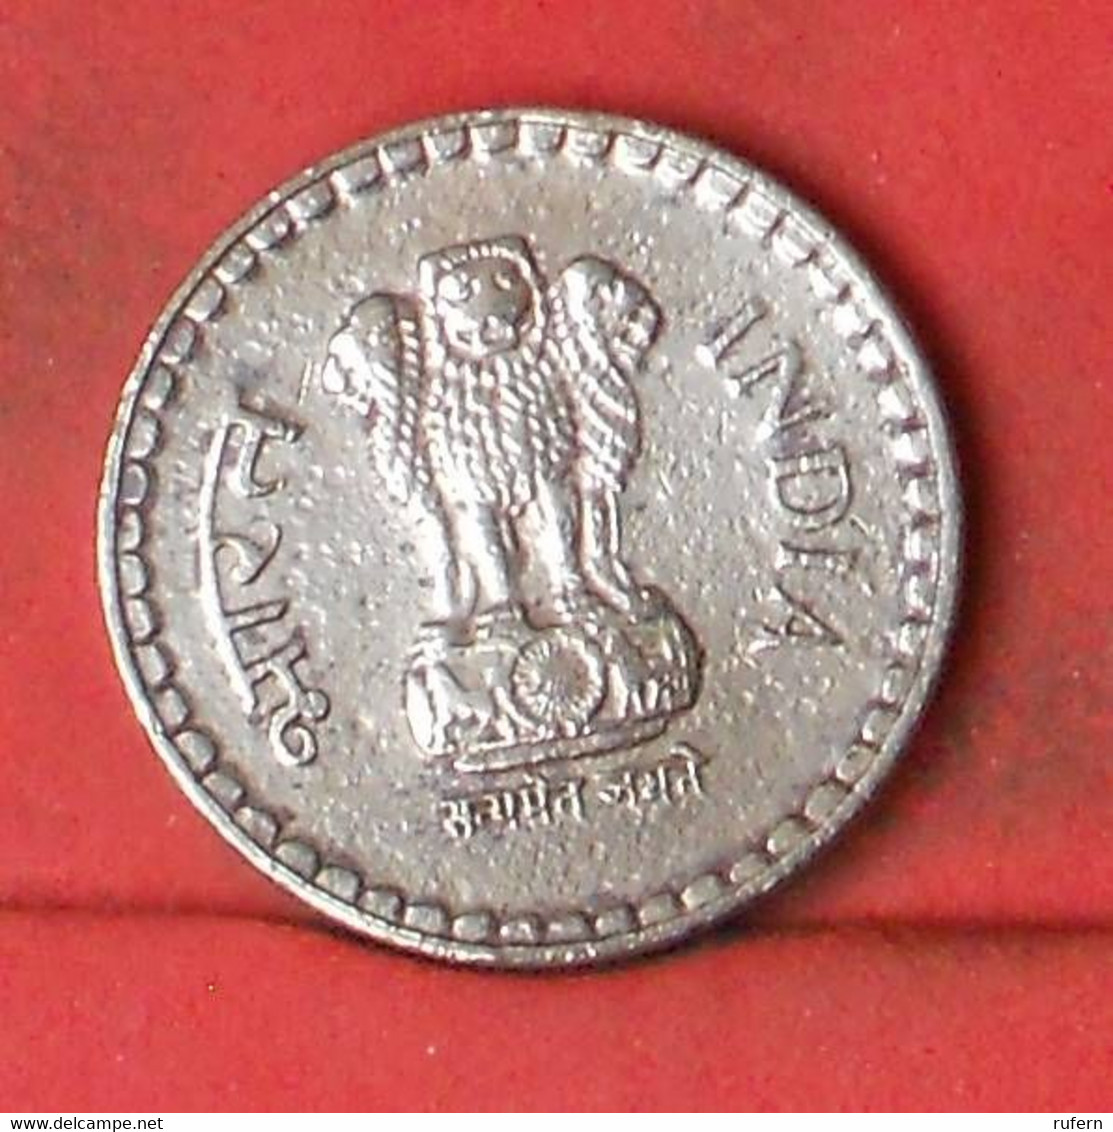 INDIA 5 RUPEES 1992 -     (Nº41880) - India